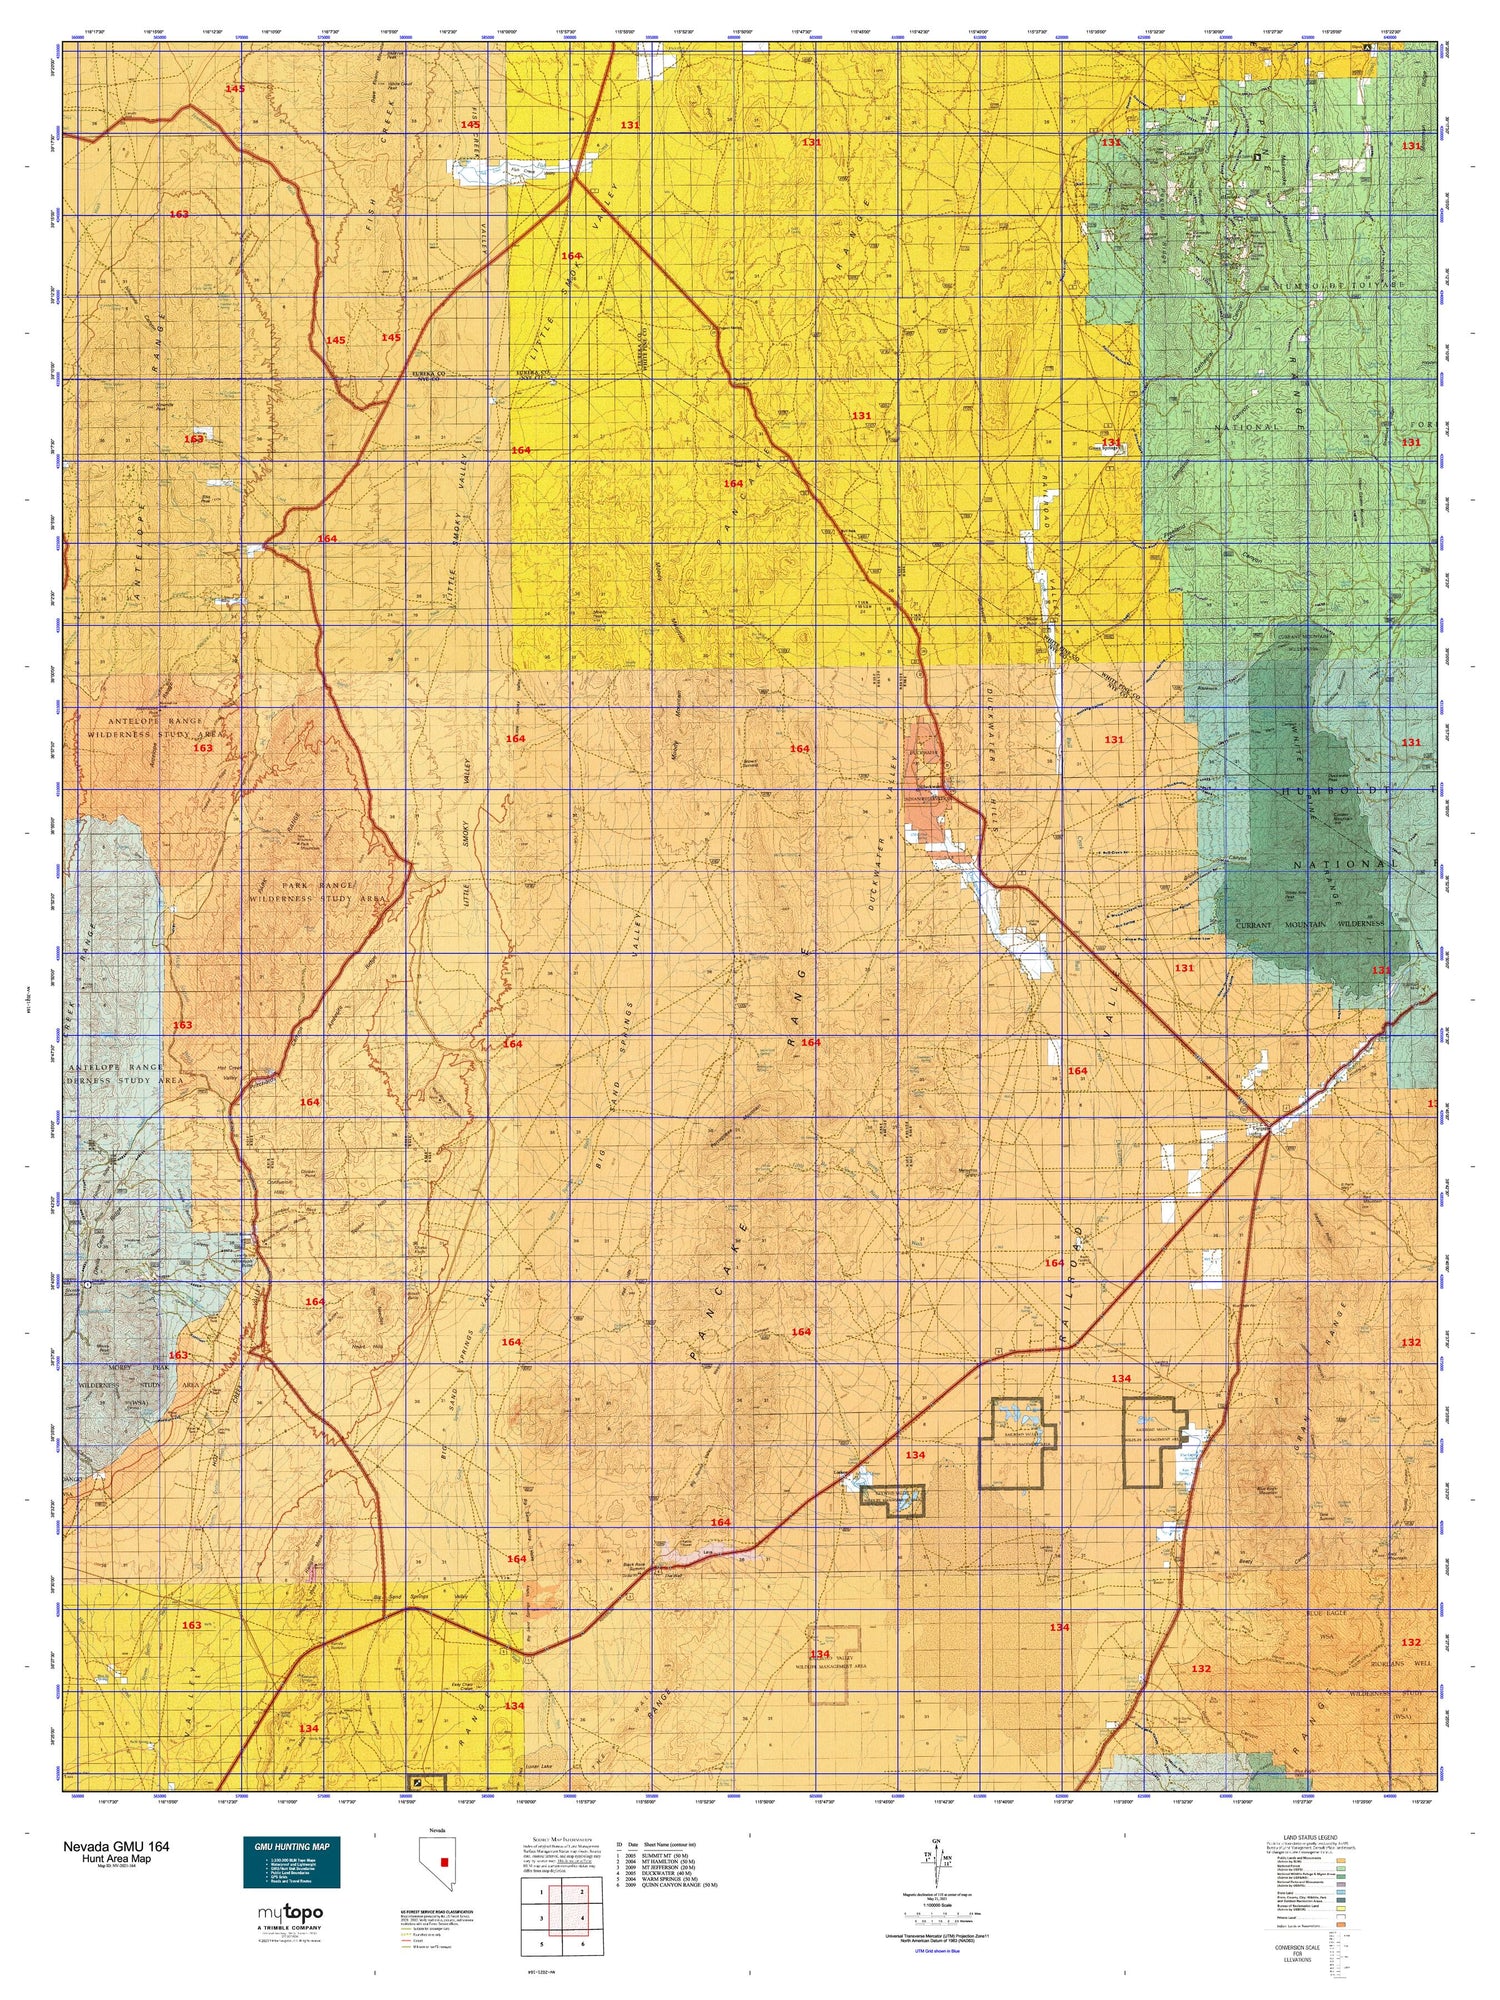 Nevada GMU 164 Map Image